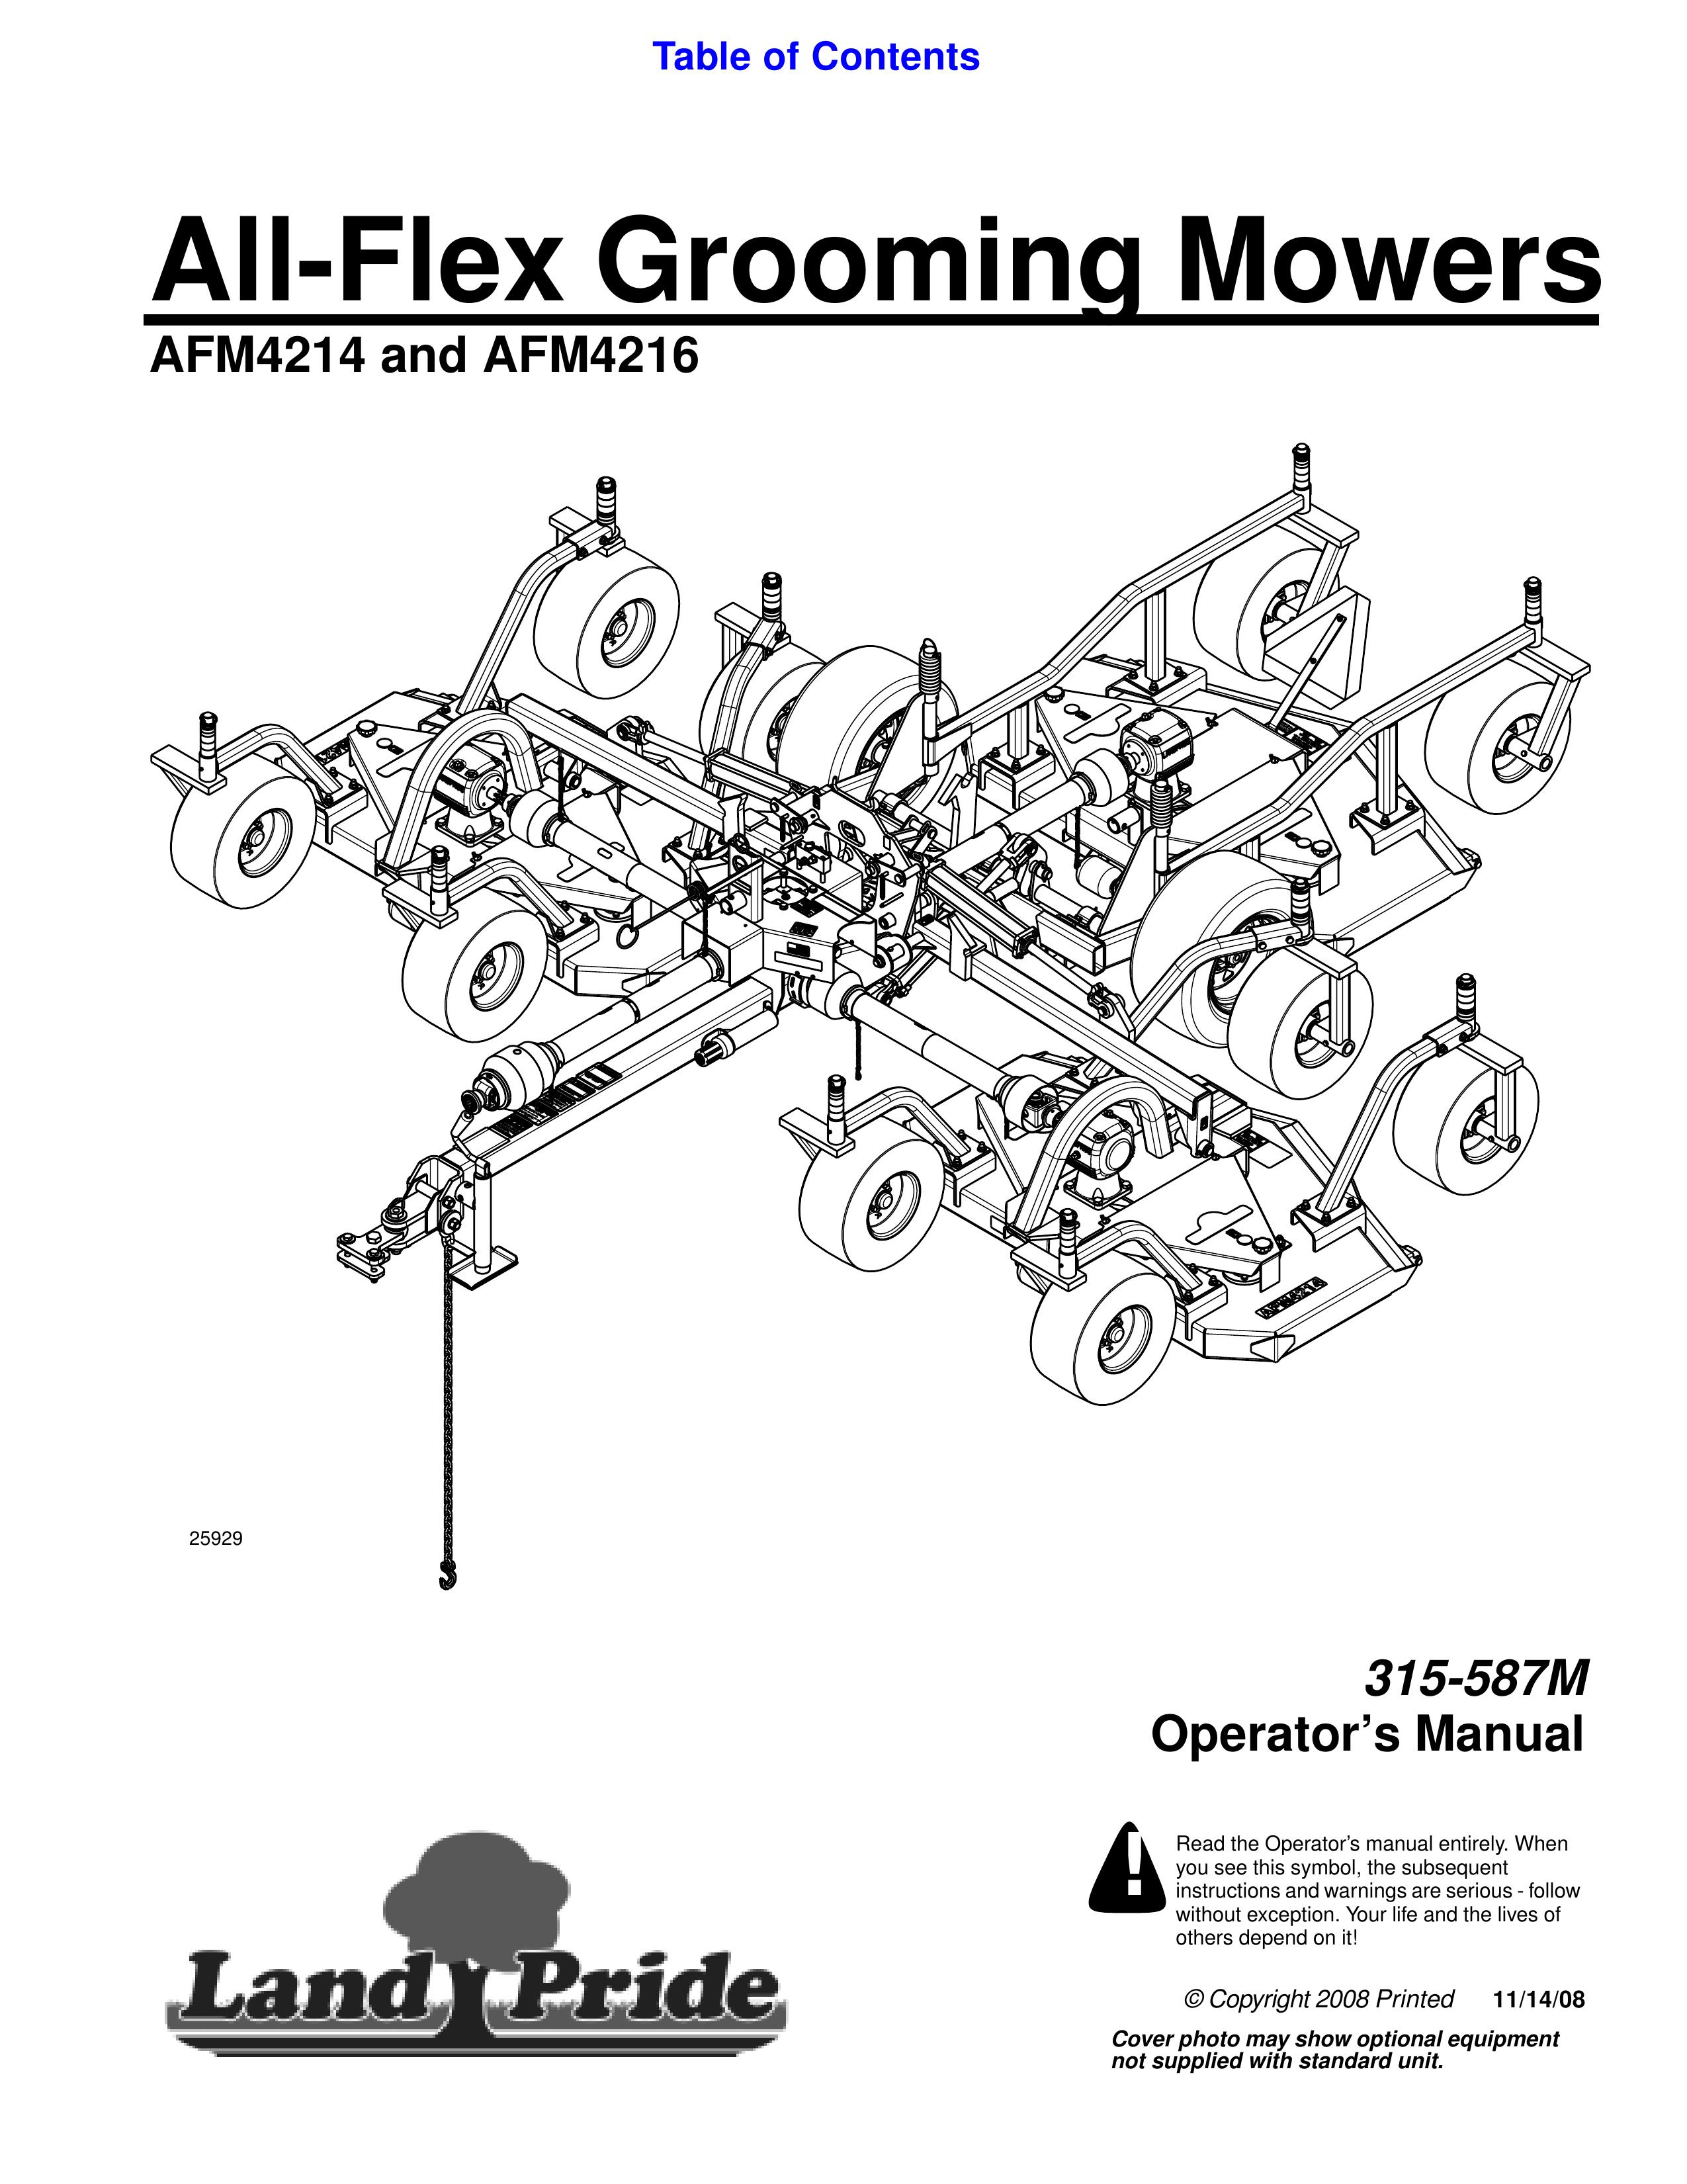 Land Pride AFM4216 Lawn Mower User Manual